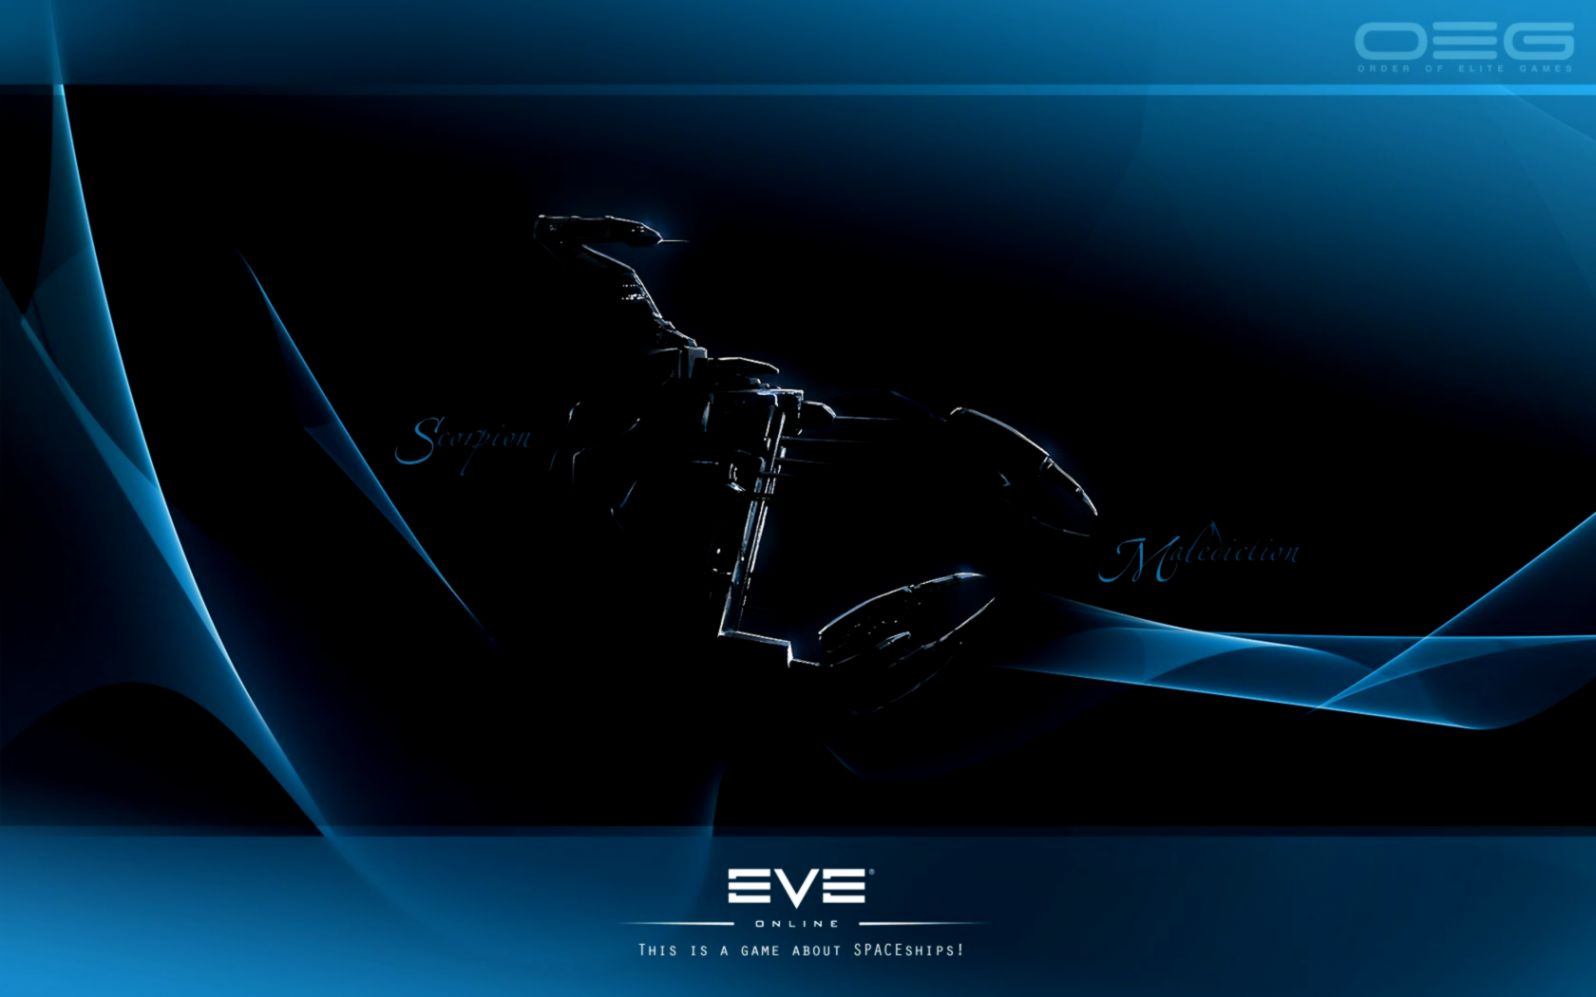 Eve Online Wallpaper Pc